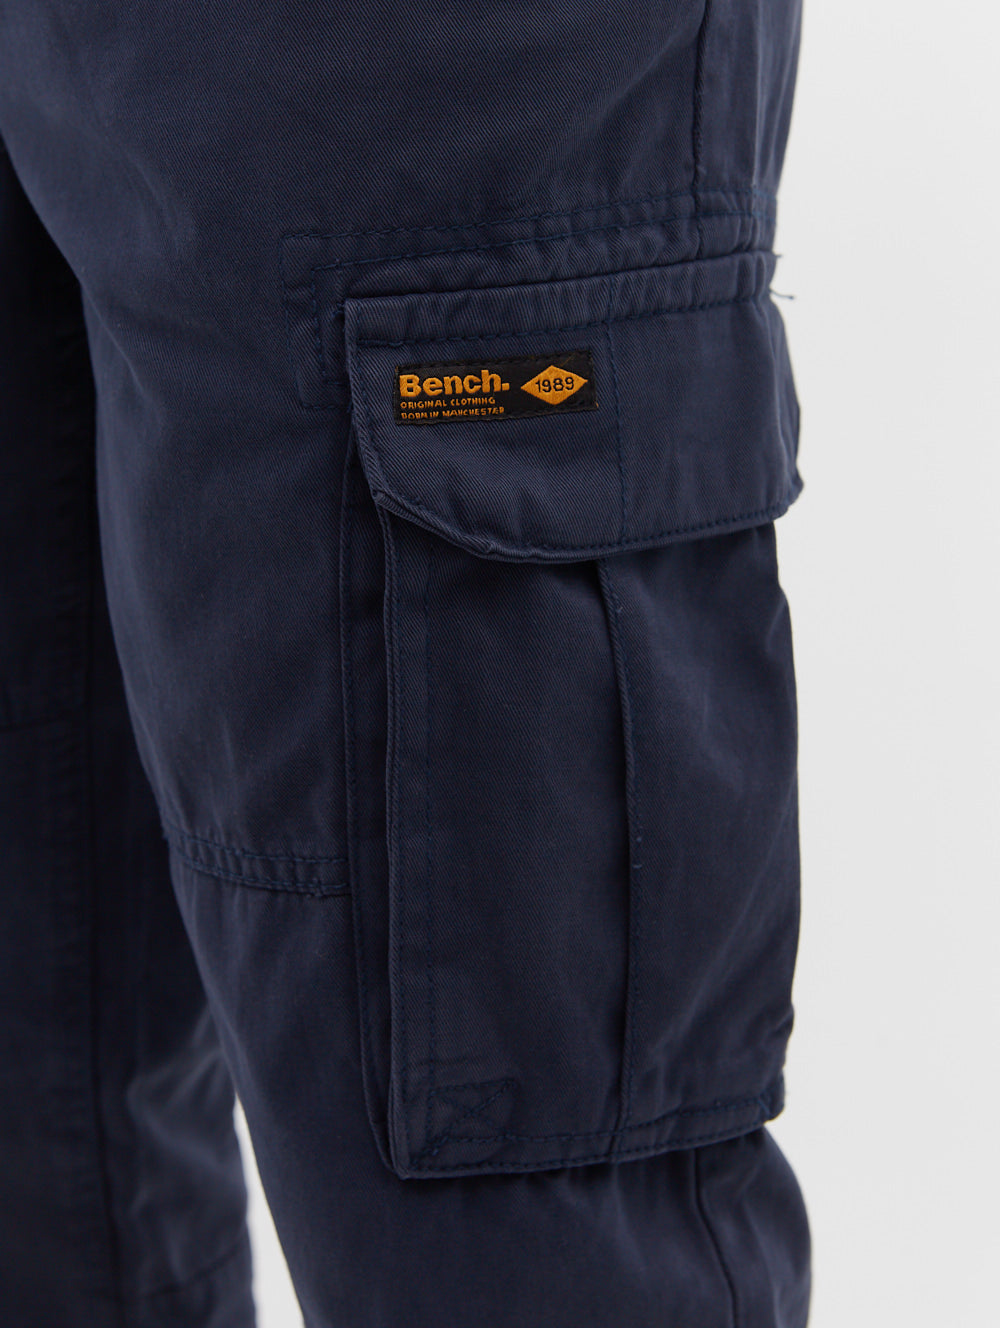 Bench SERGEI Cargo Pants / Trousers - BLACK (B01) | eBay